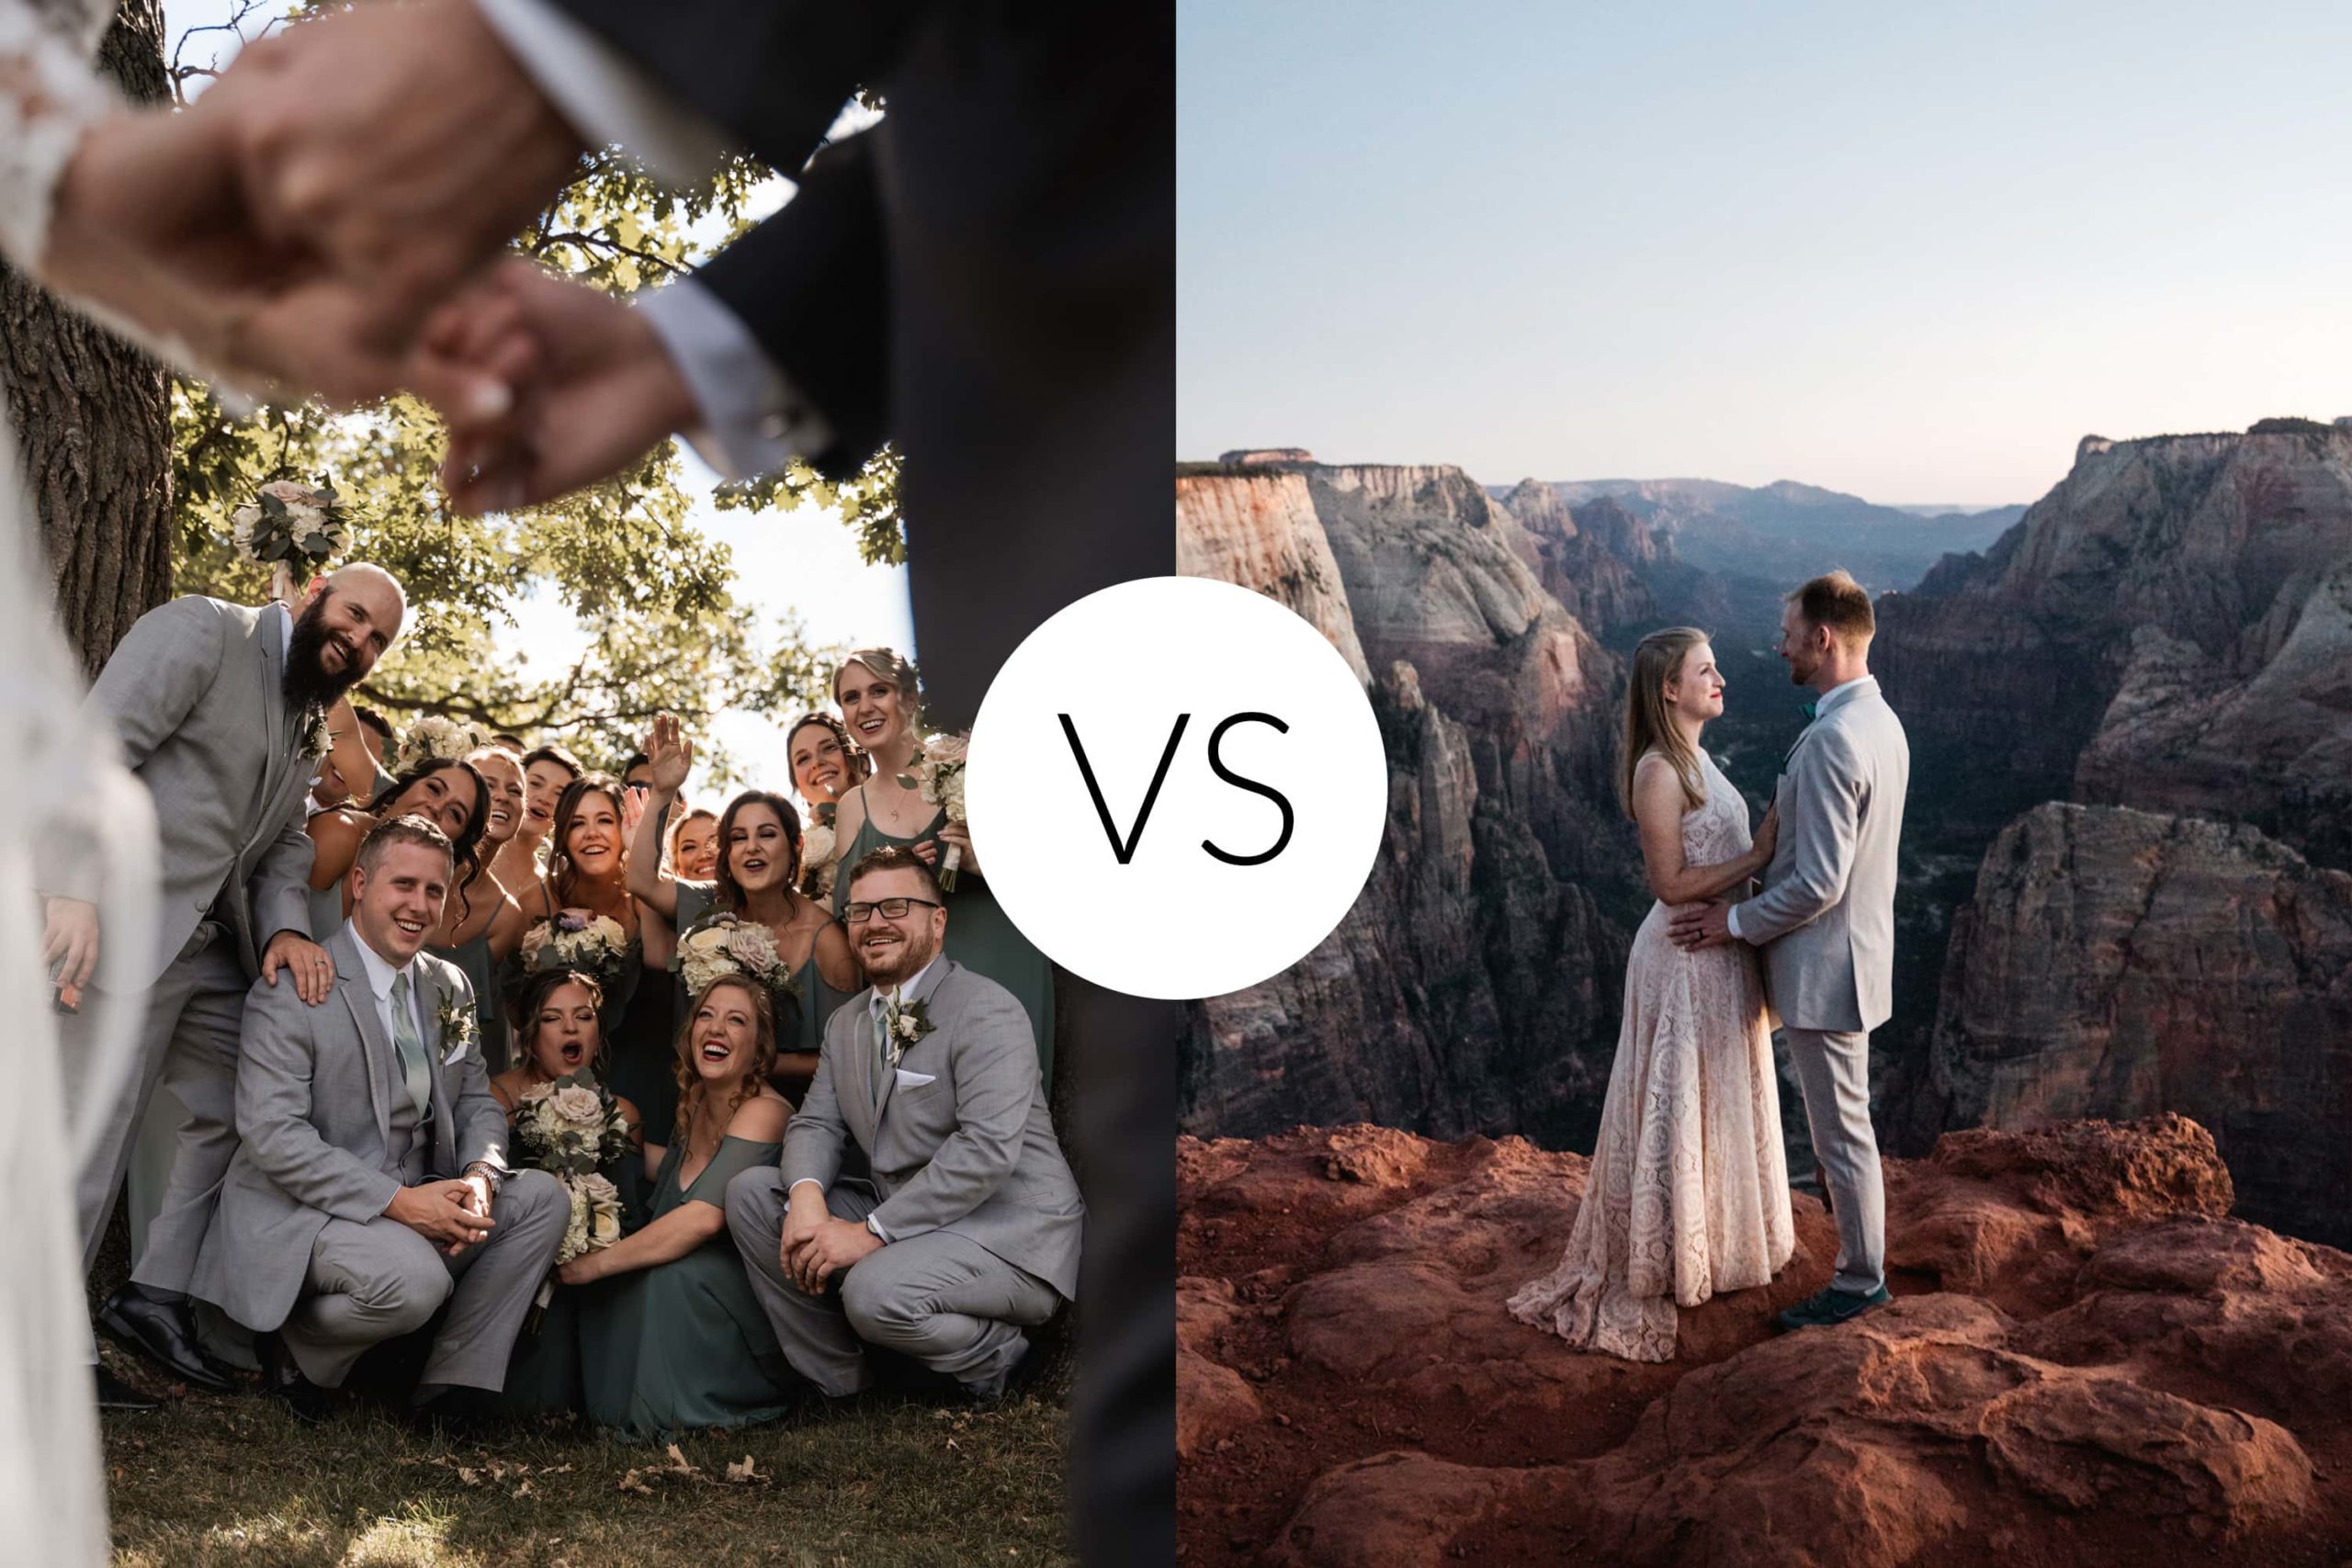 https://fearlesselopement.com/wp-content/uploads/2022/06/elopement-vs-wedding-scaled.jpg